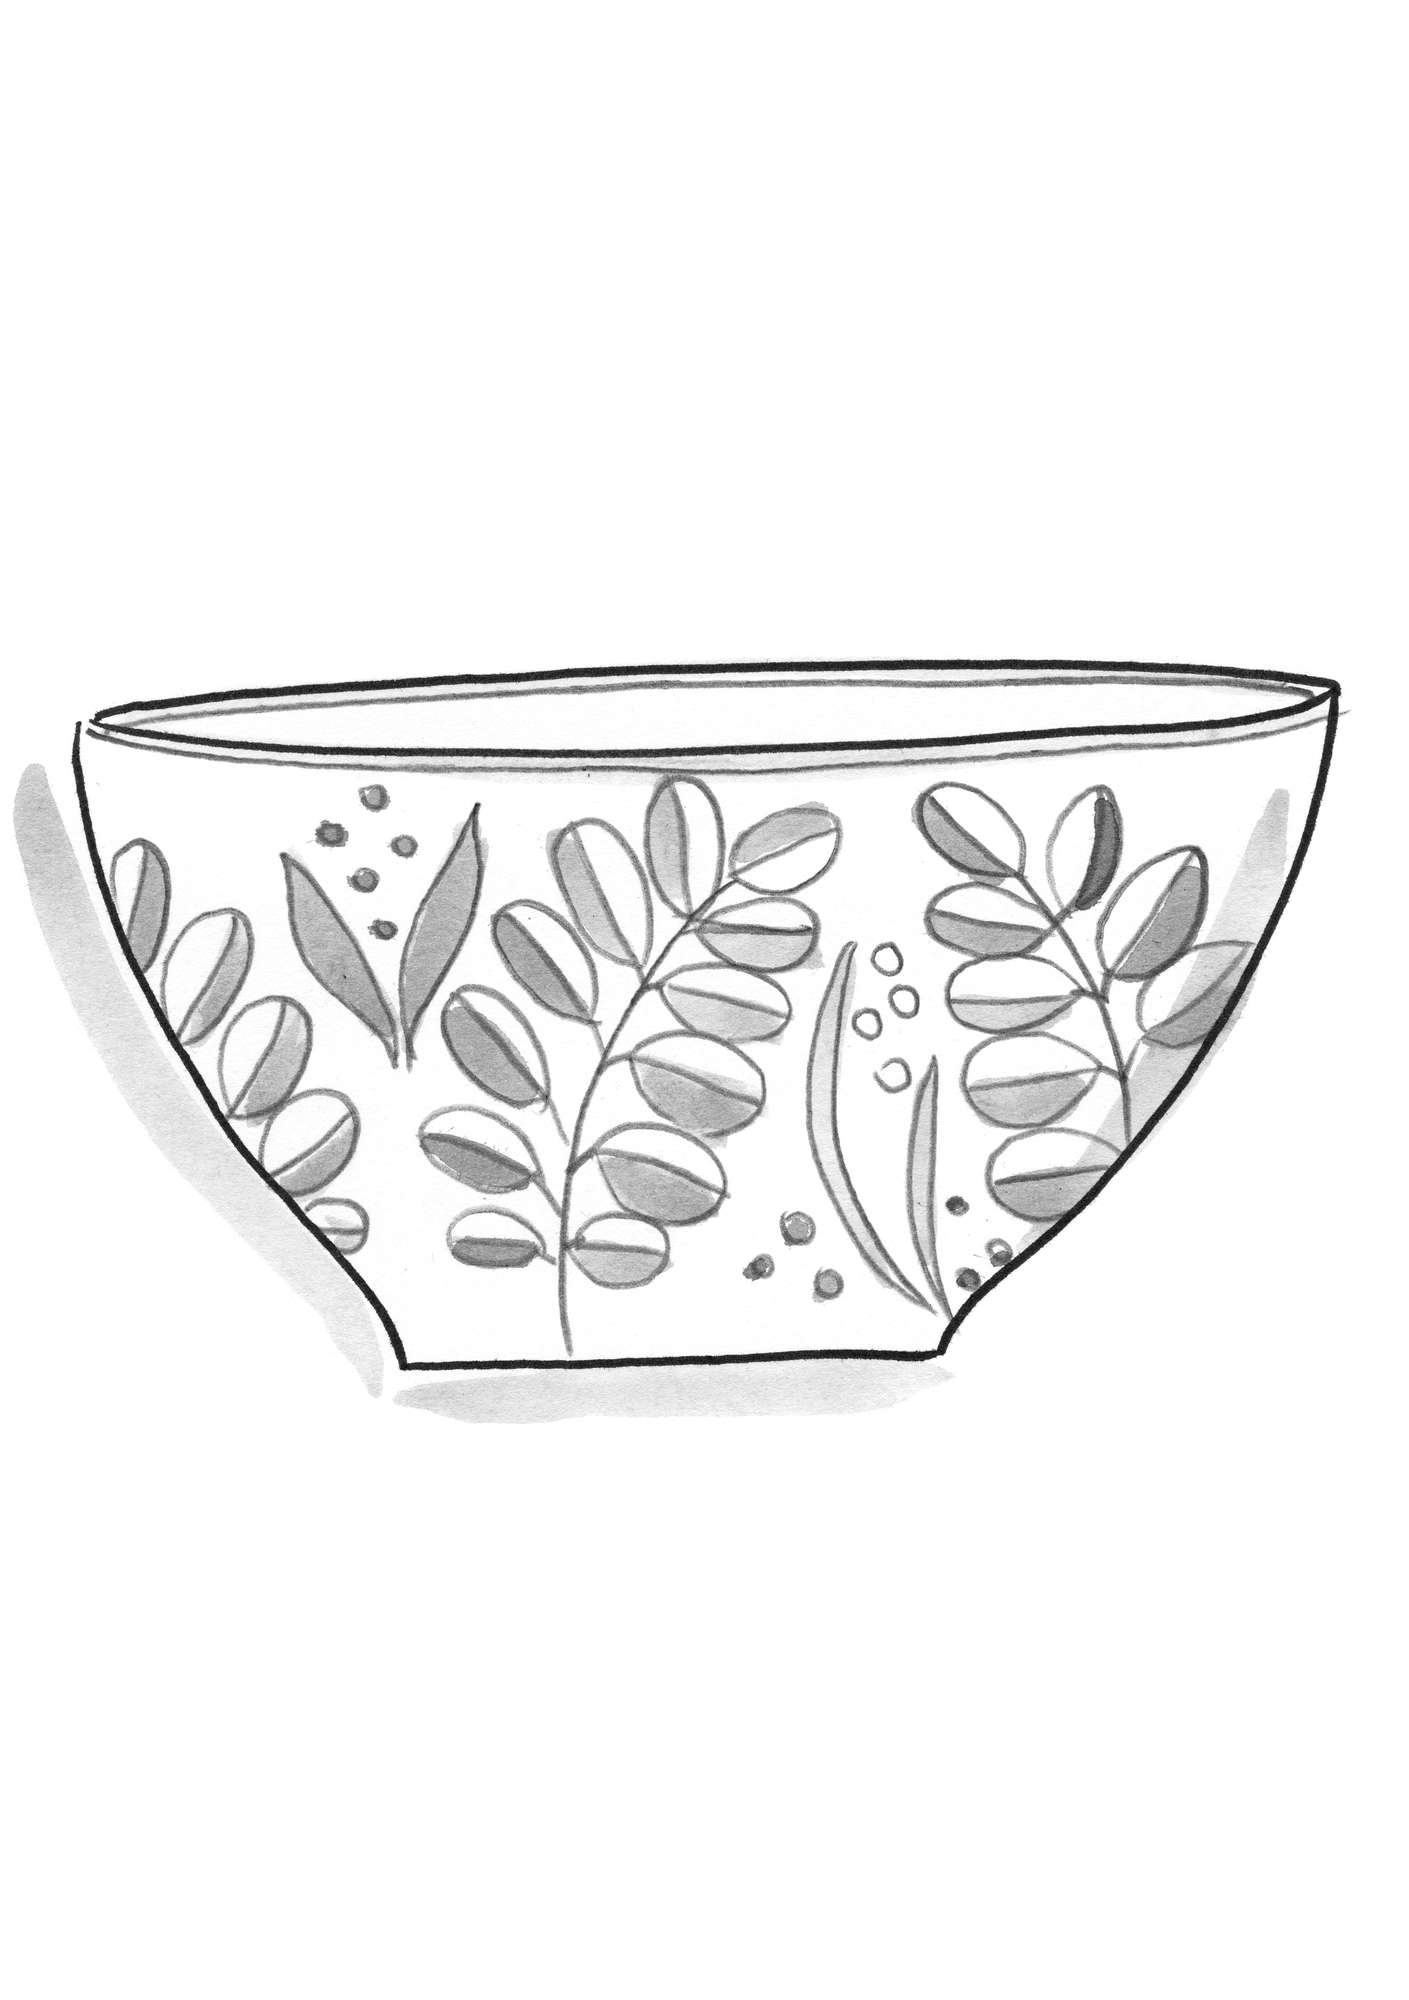 “Meadow” ceramic bowl